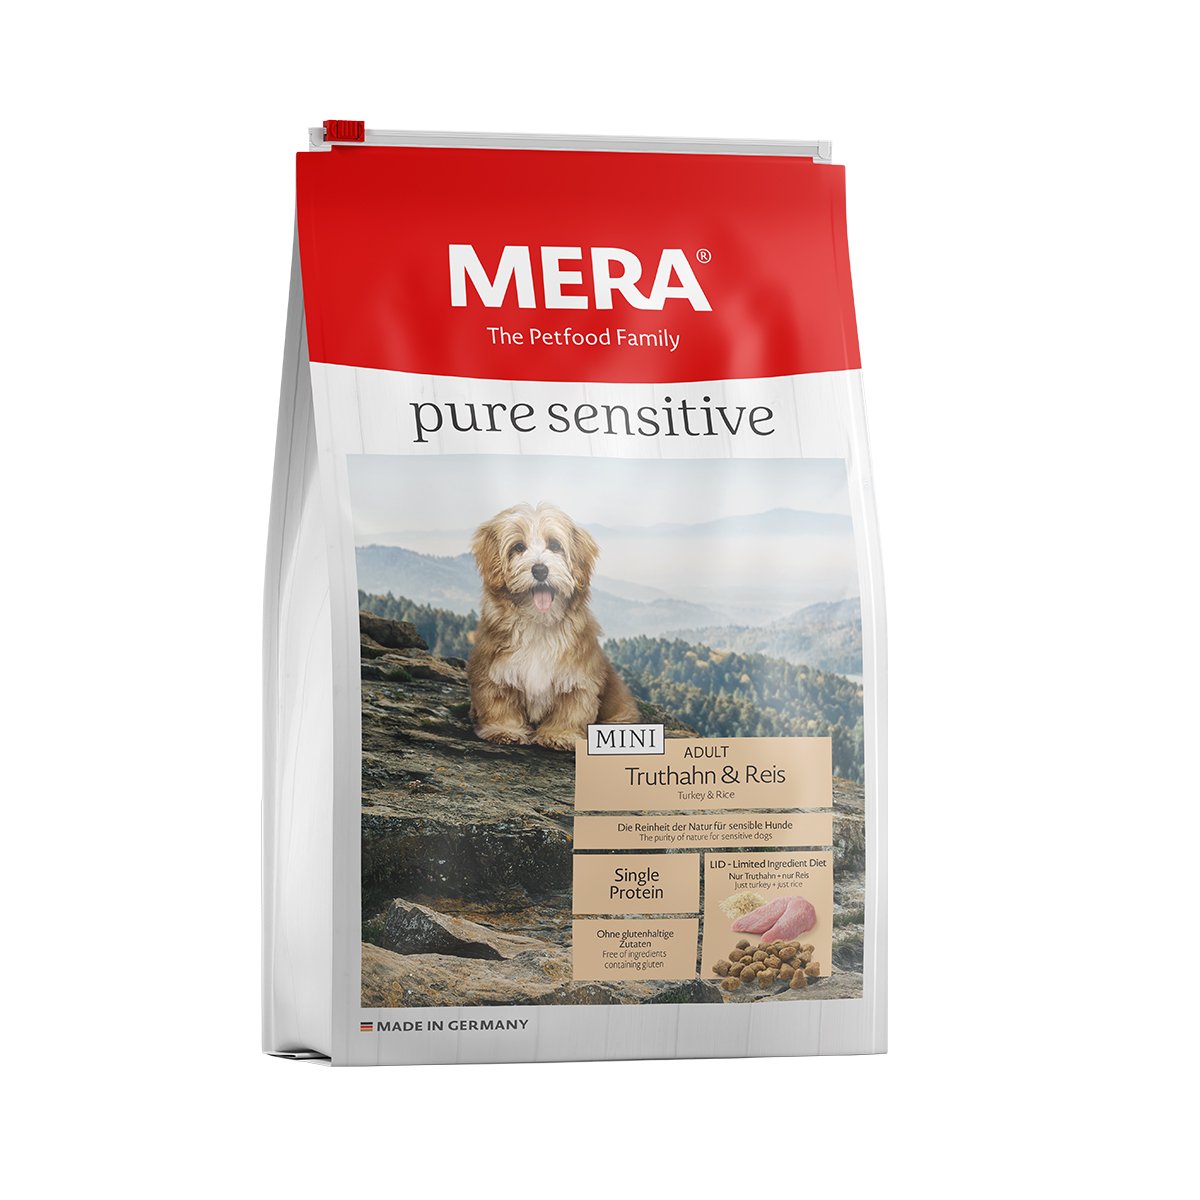 MERA pure sensitive Mini Adult Truthahn und Reis 4kg